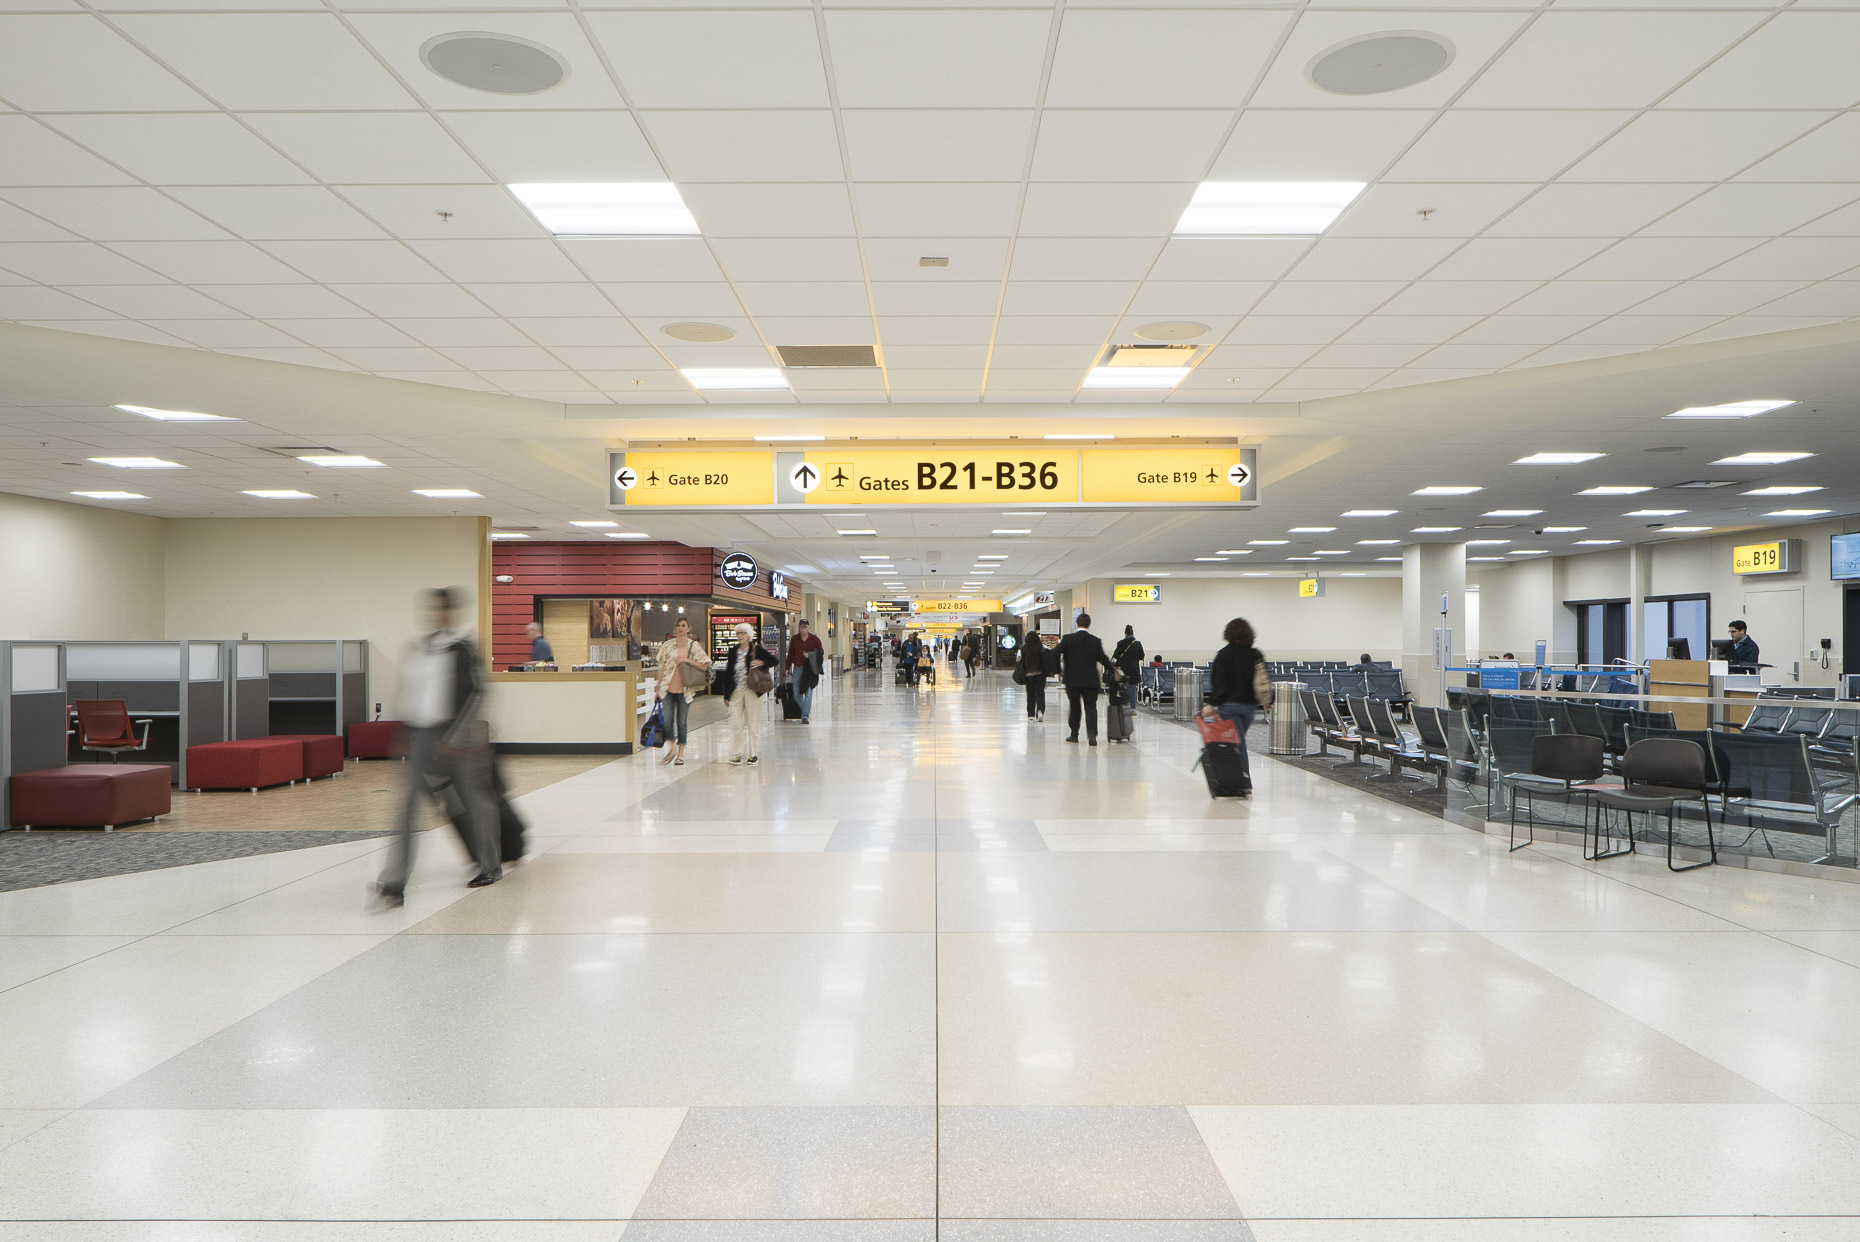 John Glenn International Airport Concourses B & C by Gilbane photographed by Lauren K Davis based in Columbus, Ohio